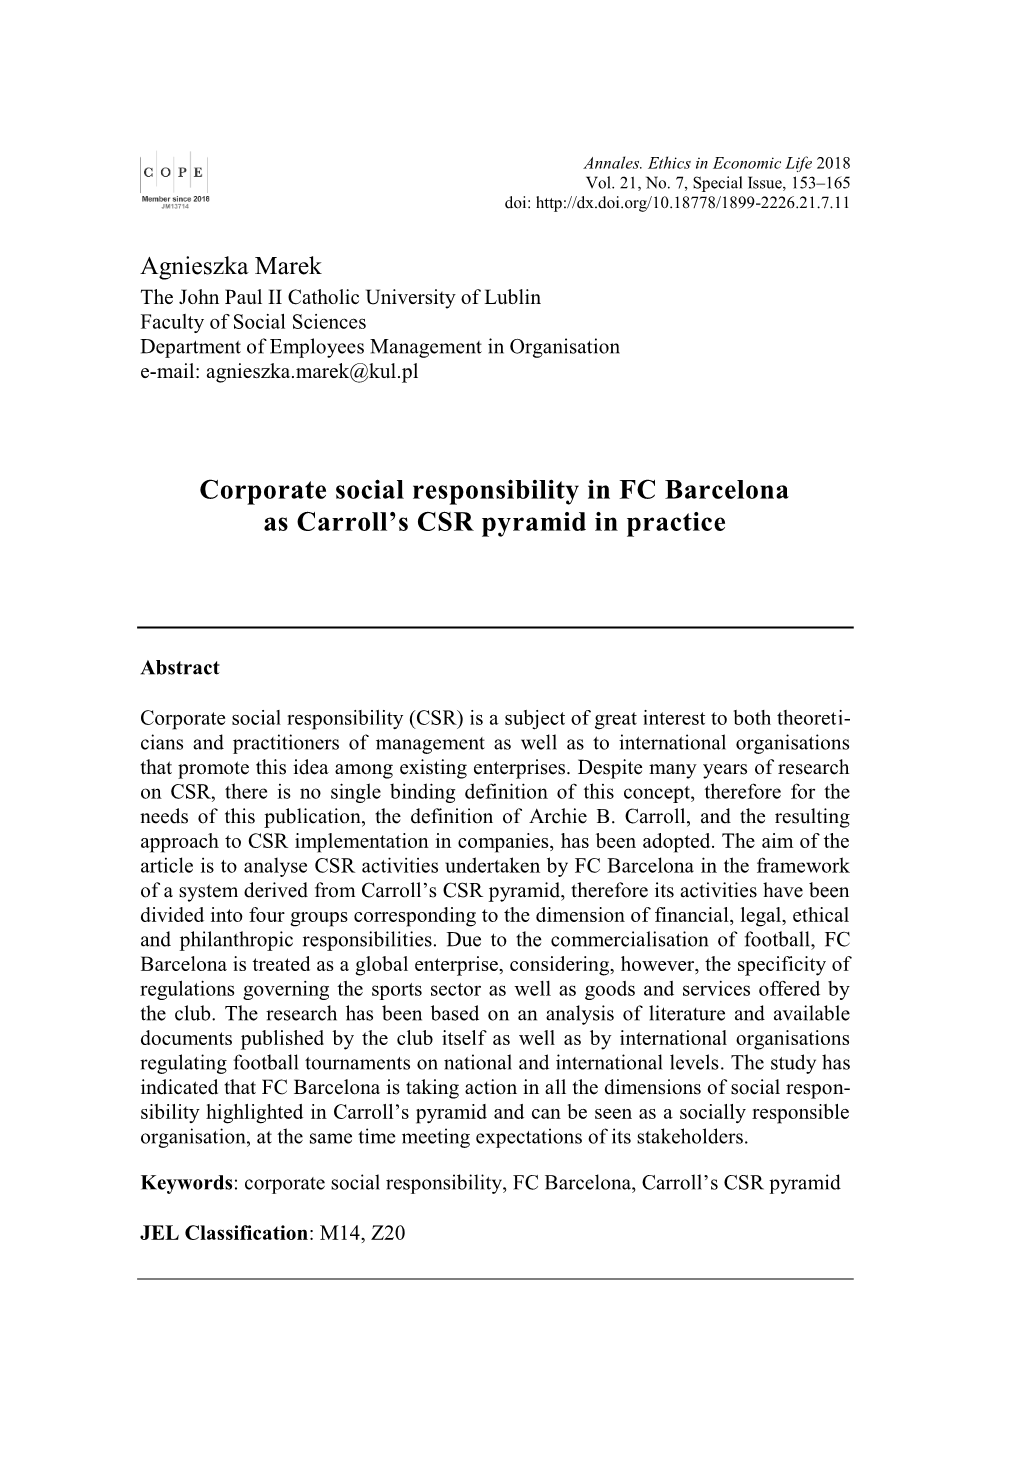 Corporate Social Responsibility in FC Barcelona As Carroll's CSR